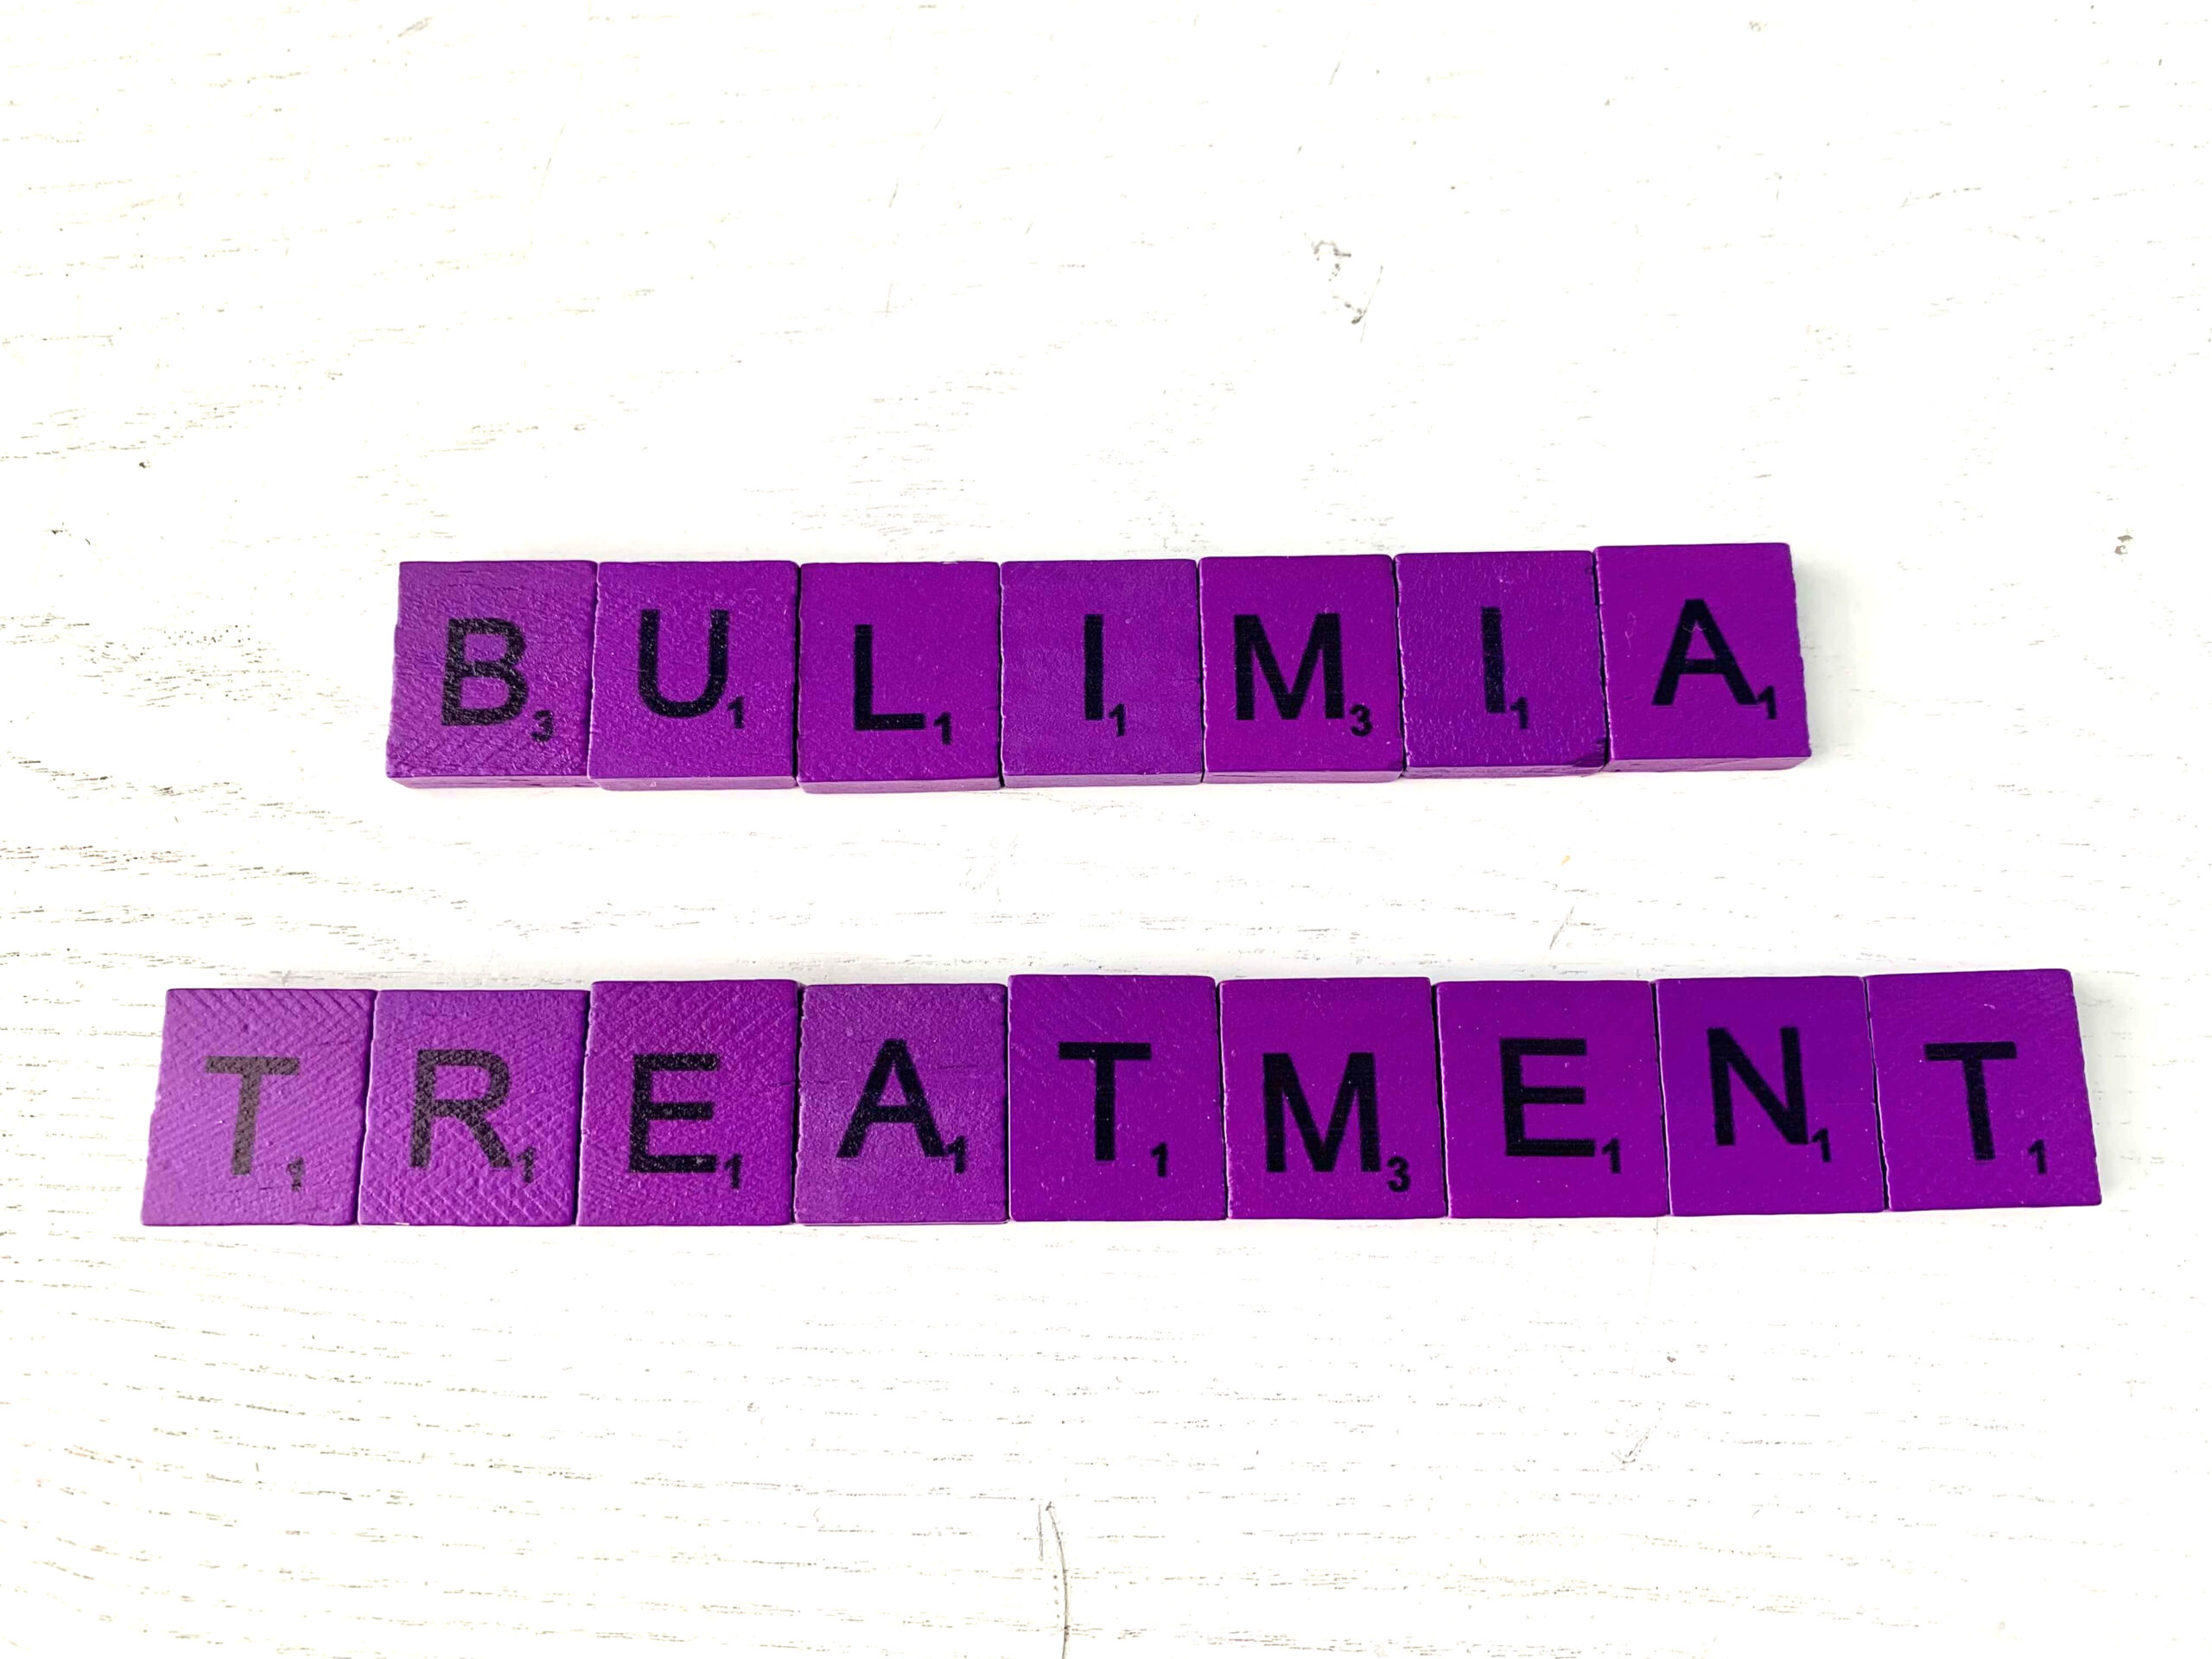 Bulimia Treatment in Los Angeles, CA [Image description: purple scrabble tiles spelling "Bulimia Treatment"]